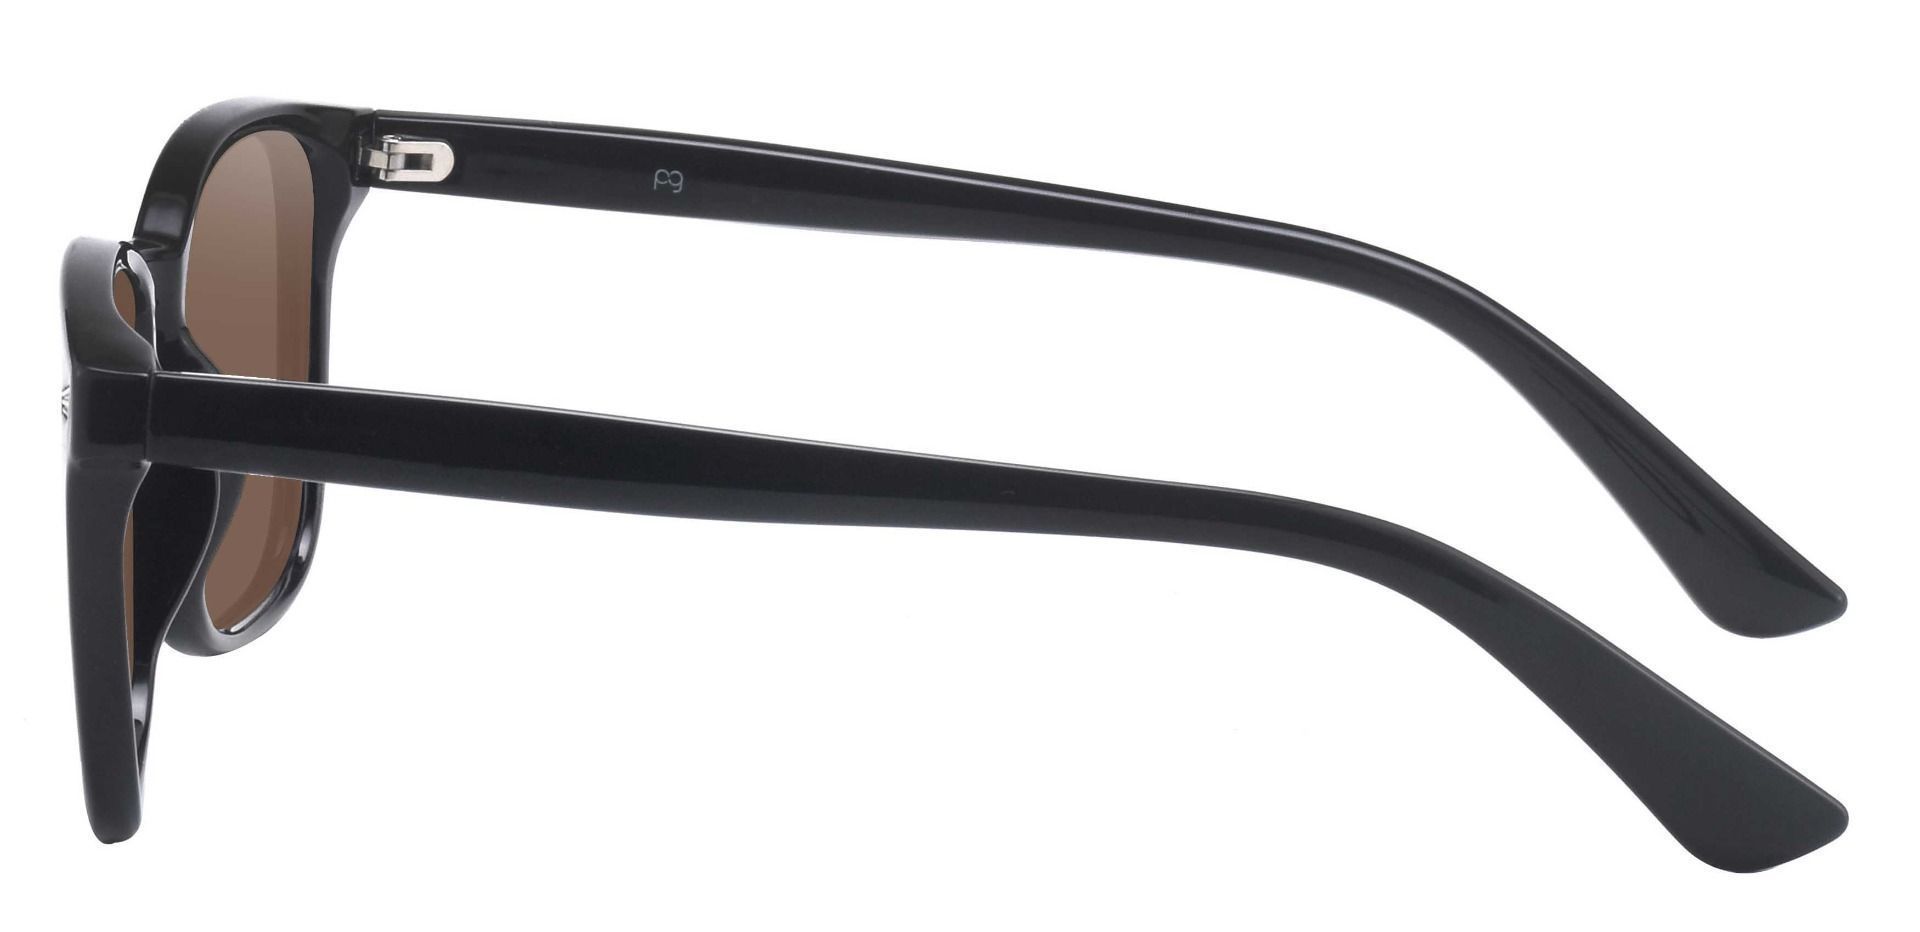 Rogan Square Prescription Sunglasses - Black Frame With Brown Lenses